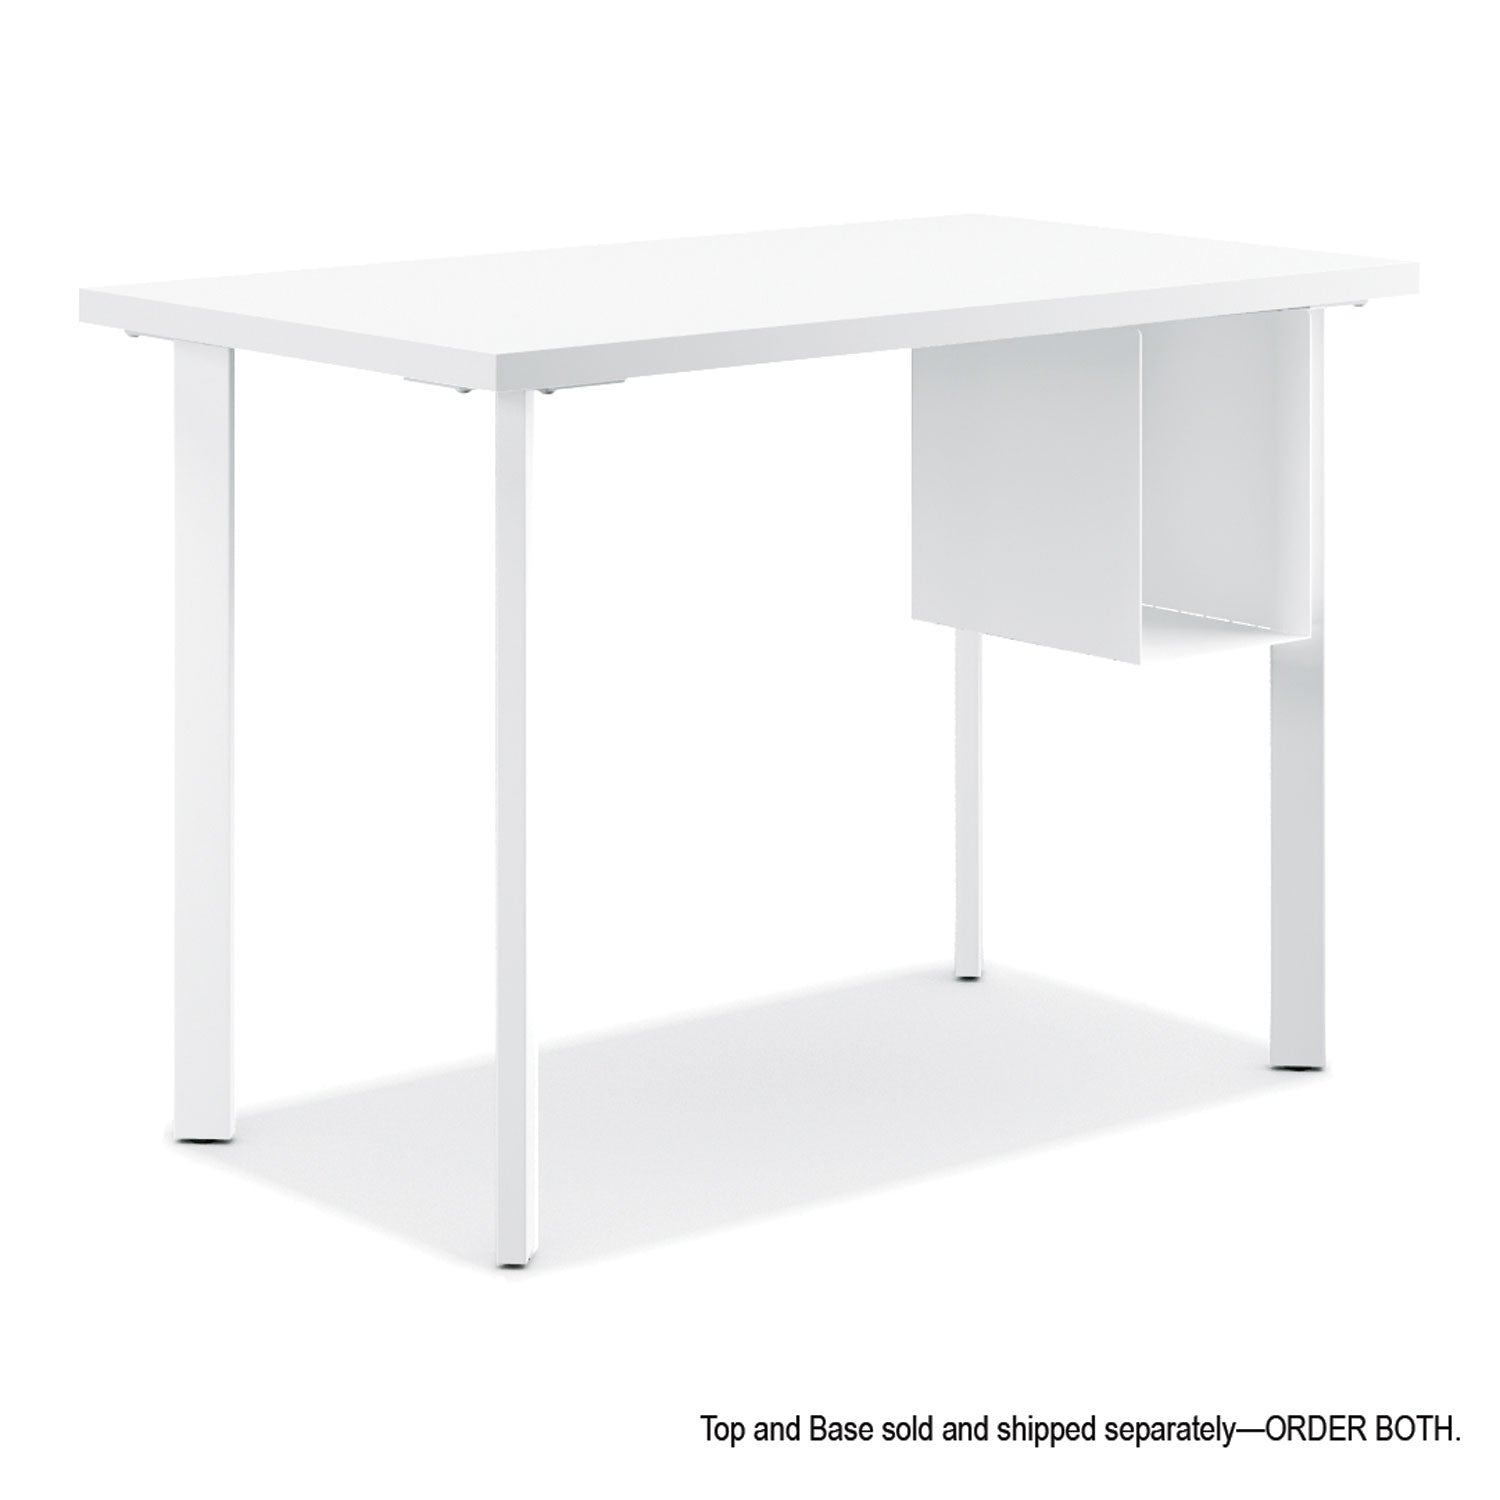 coze-writing-desk-post-legs-with-u-storage-compartment-575-x-28-designer-white-4-legs-set_honhlcpl29uspjw - 4